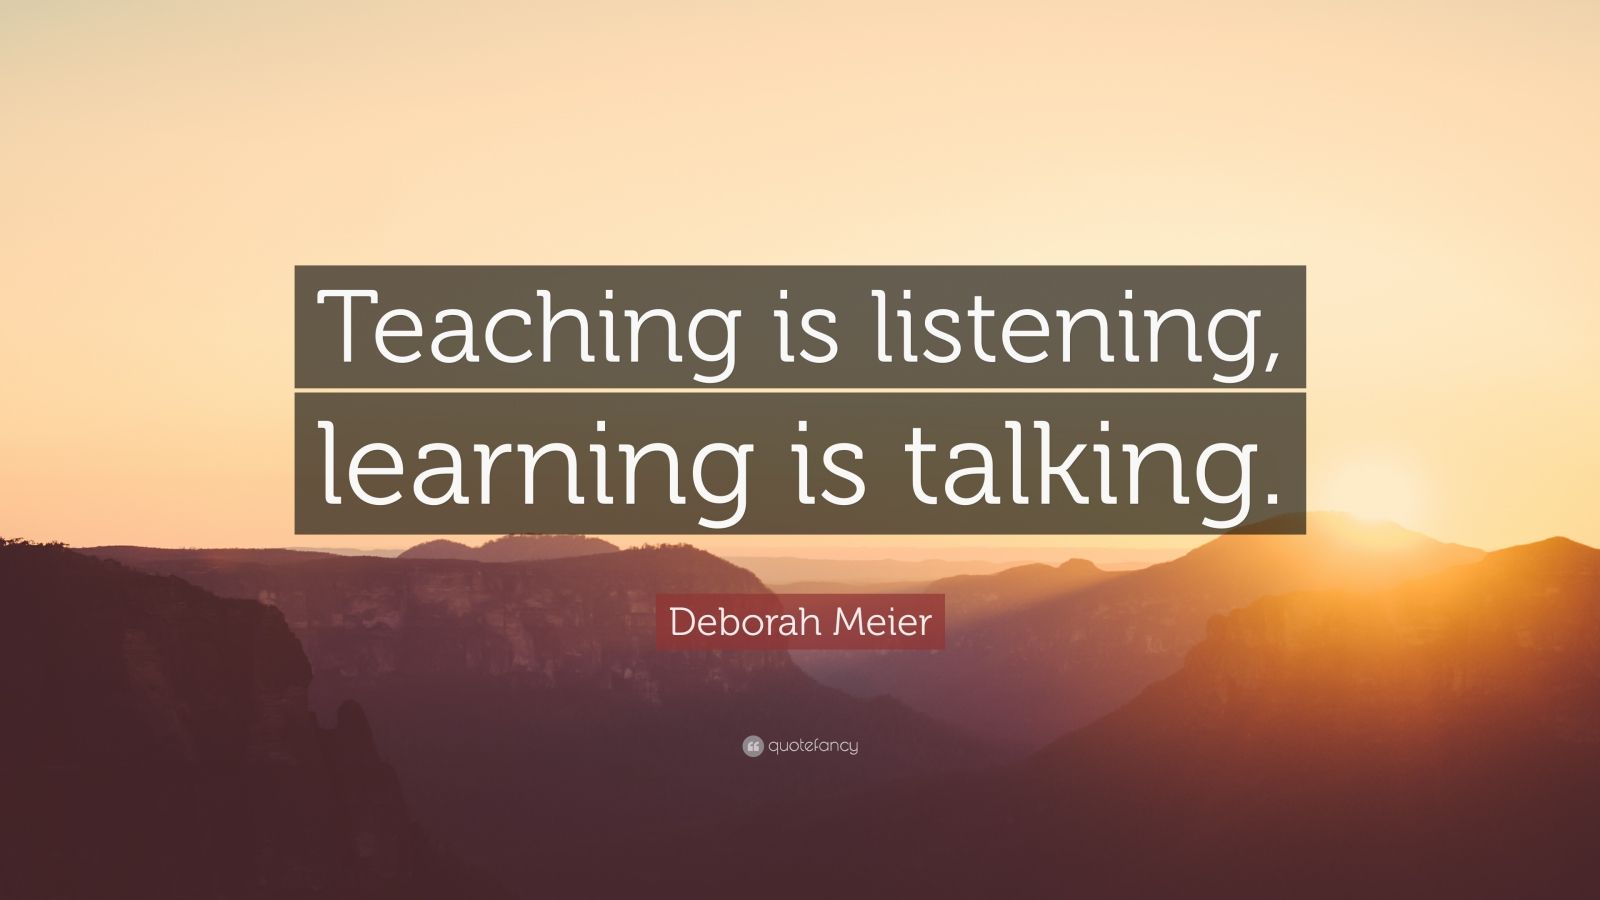 Deborah Meier Quote: “Teaching is listening, learning is talking.” (9